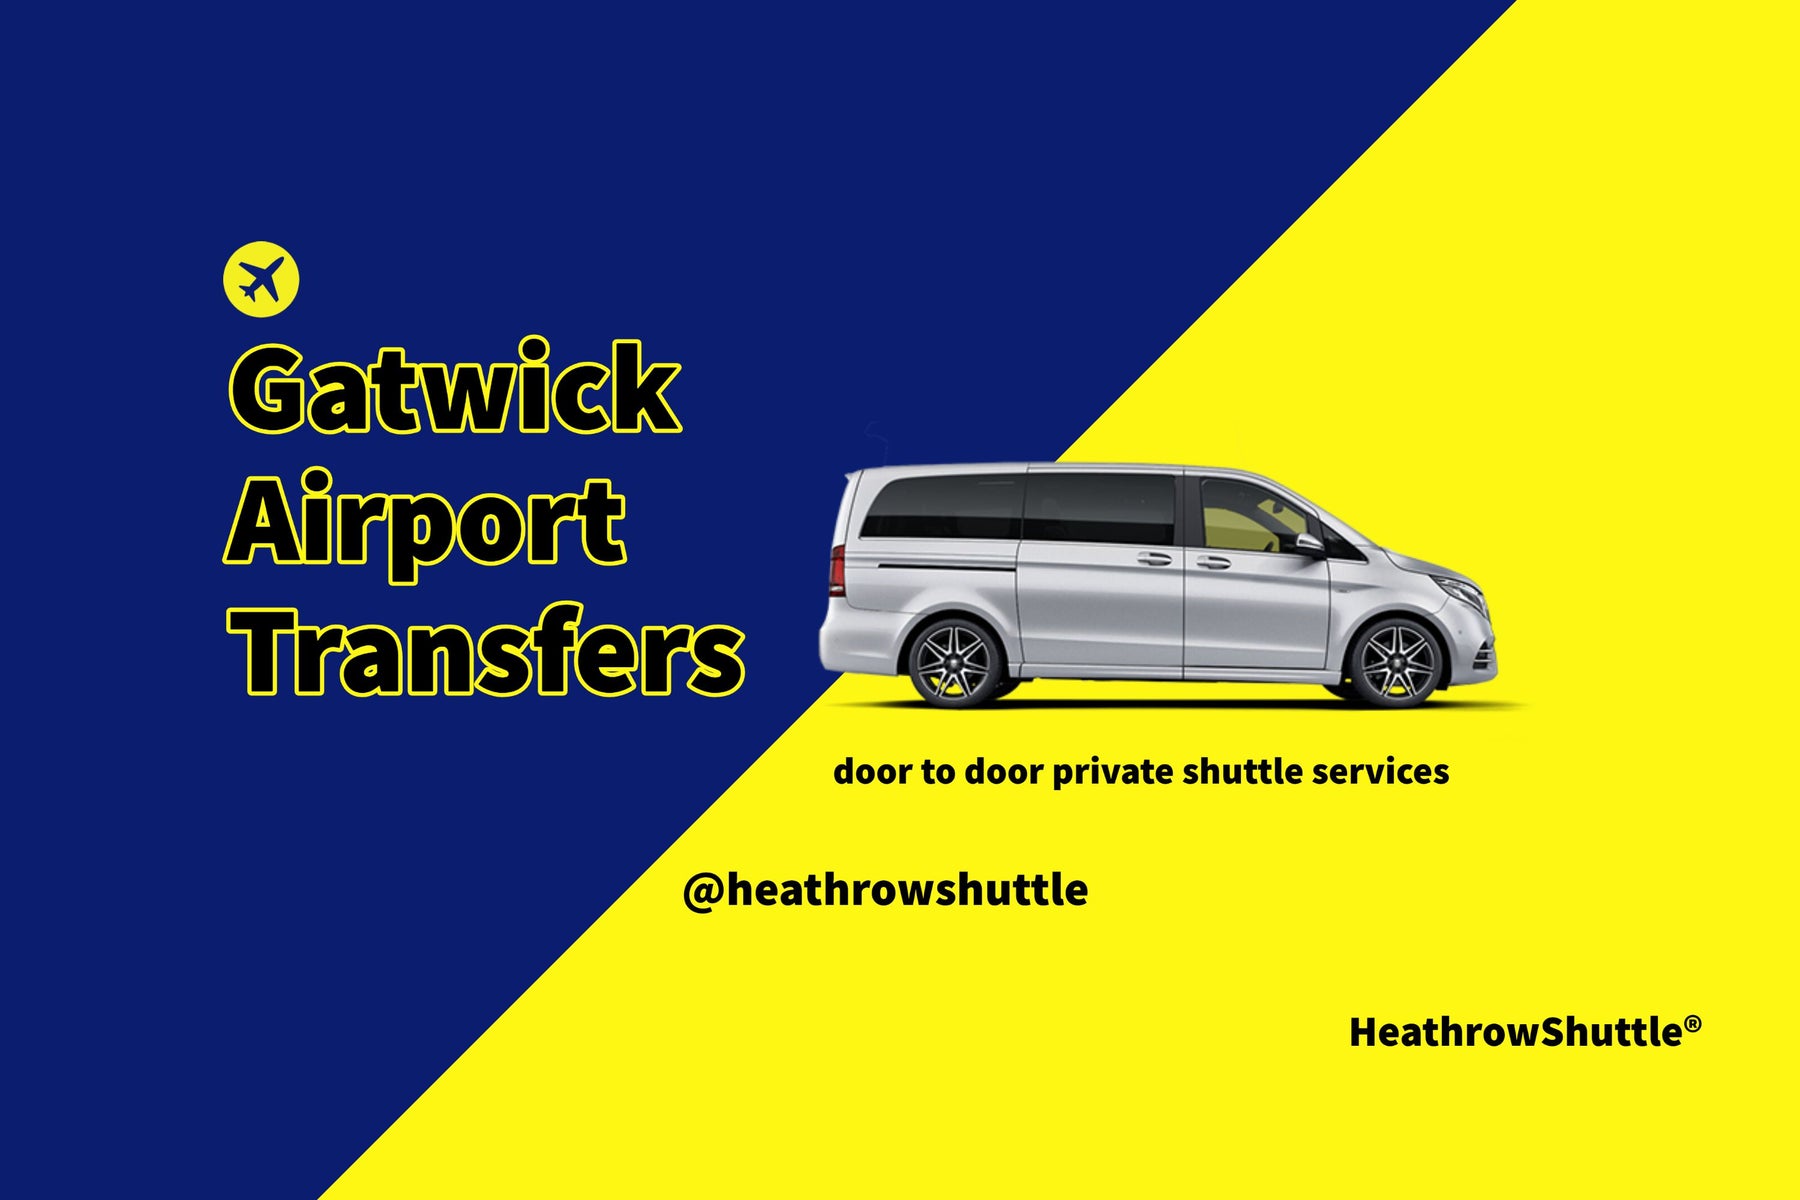 LGW Gatwick Airport Transfers